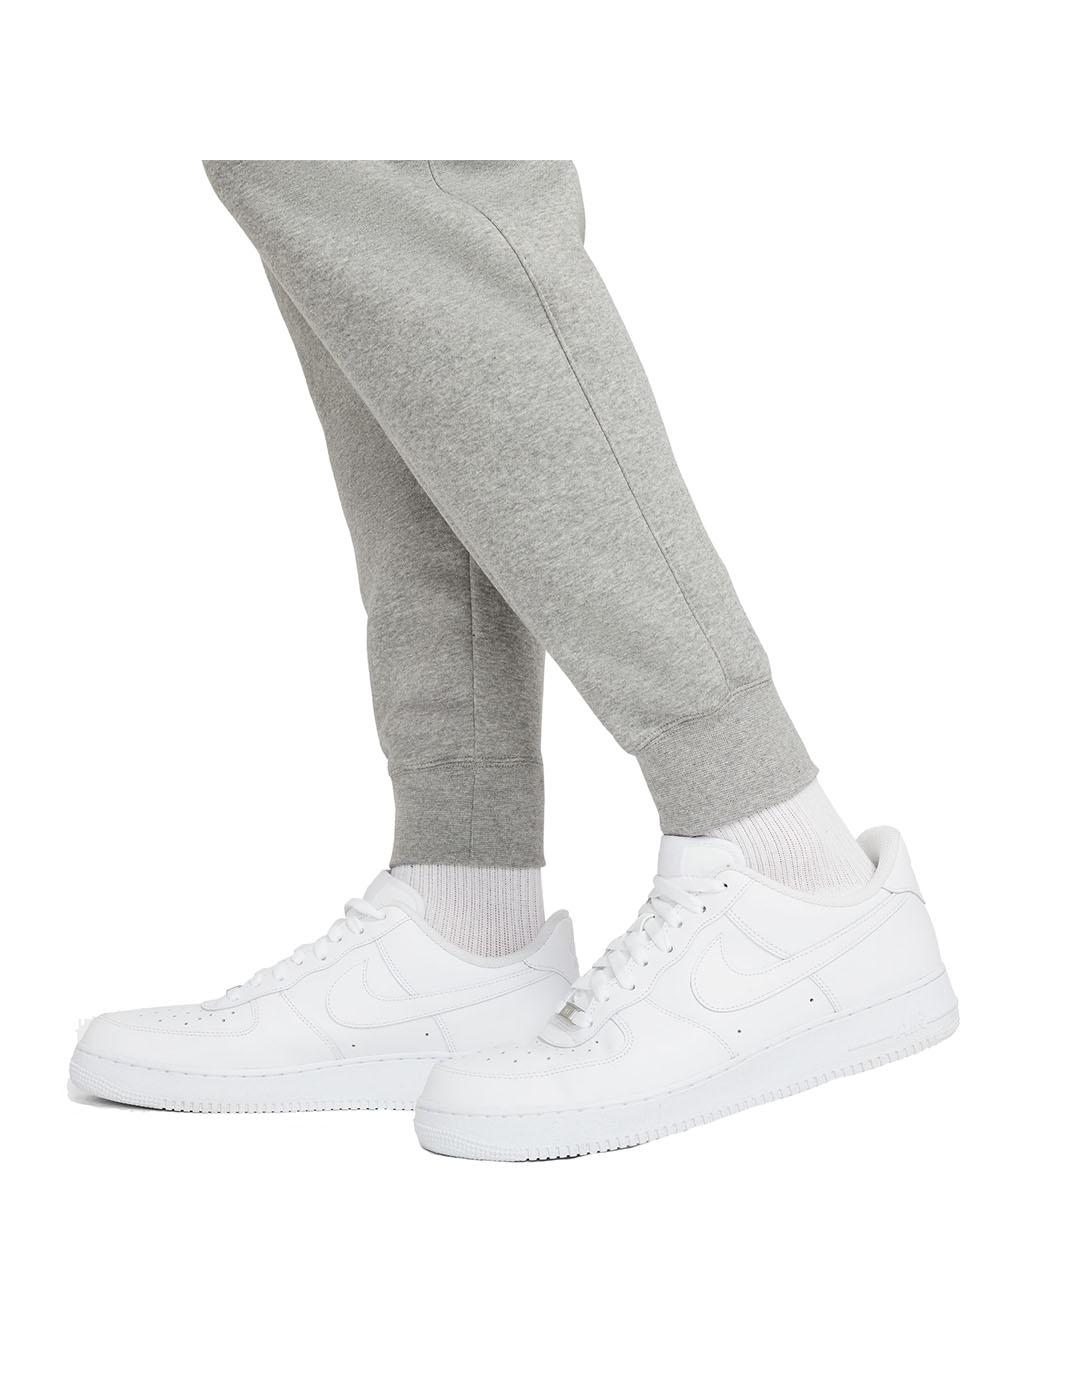 Pantalon Hombre Nike NSW Cargo Gris